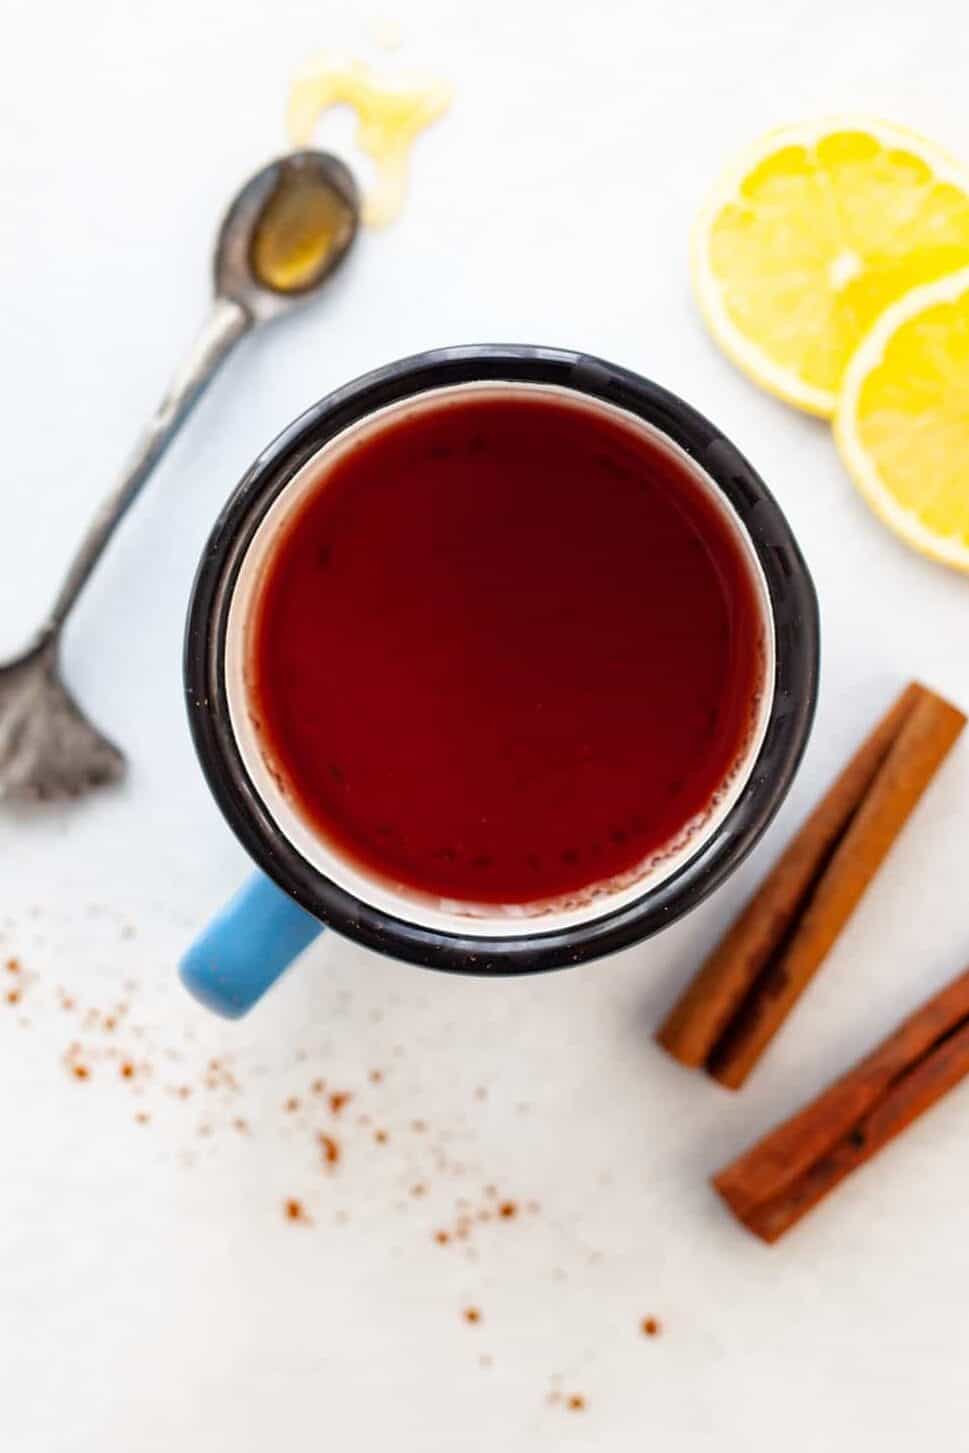 mug of cinnamon tea surrounded by cinnamon sticks, lemon and honey